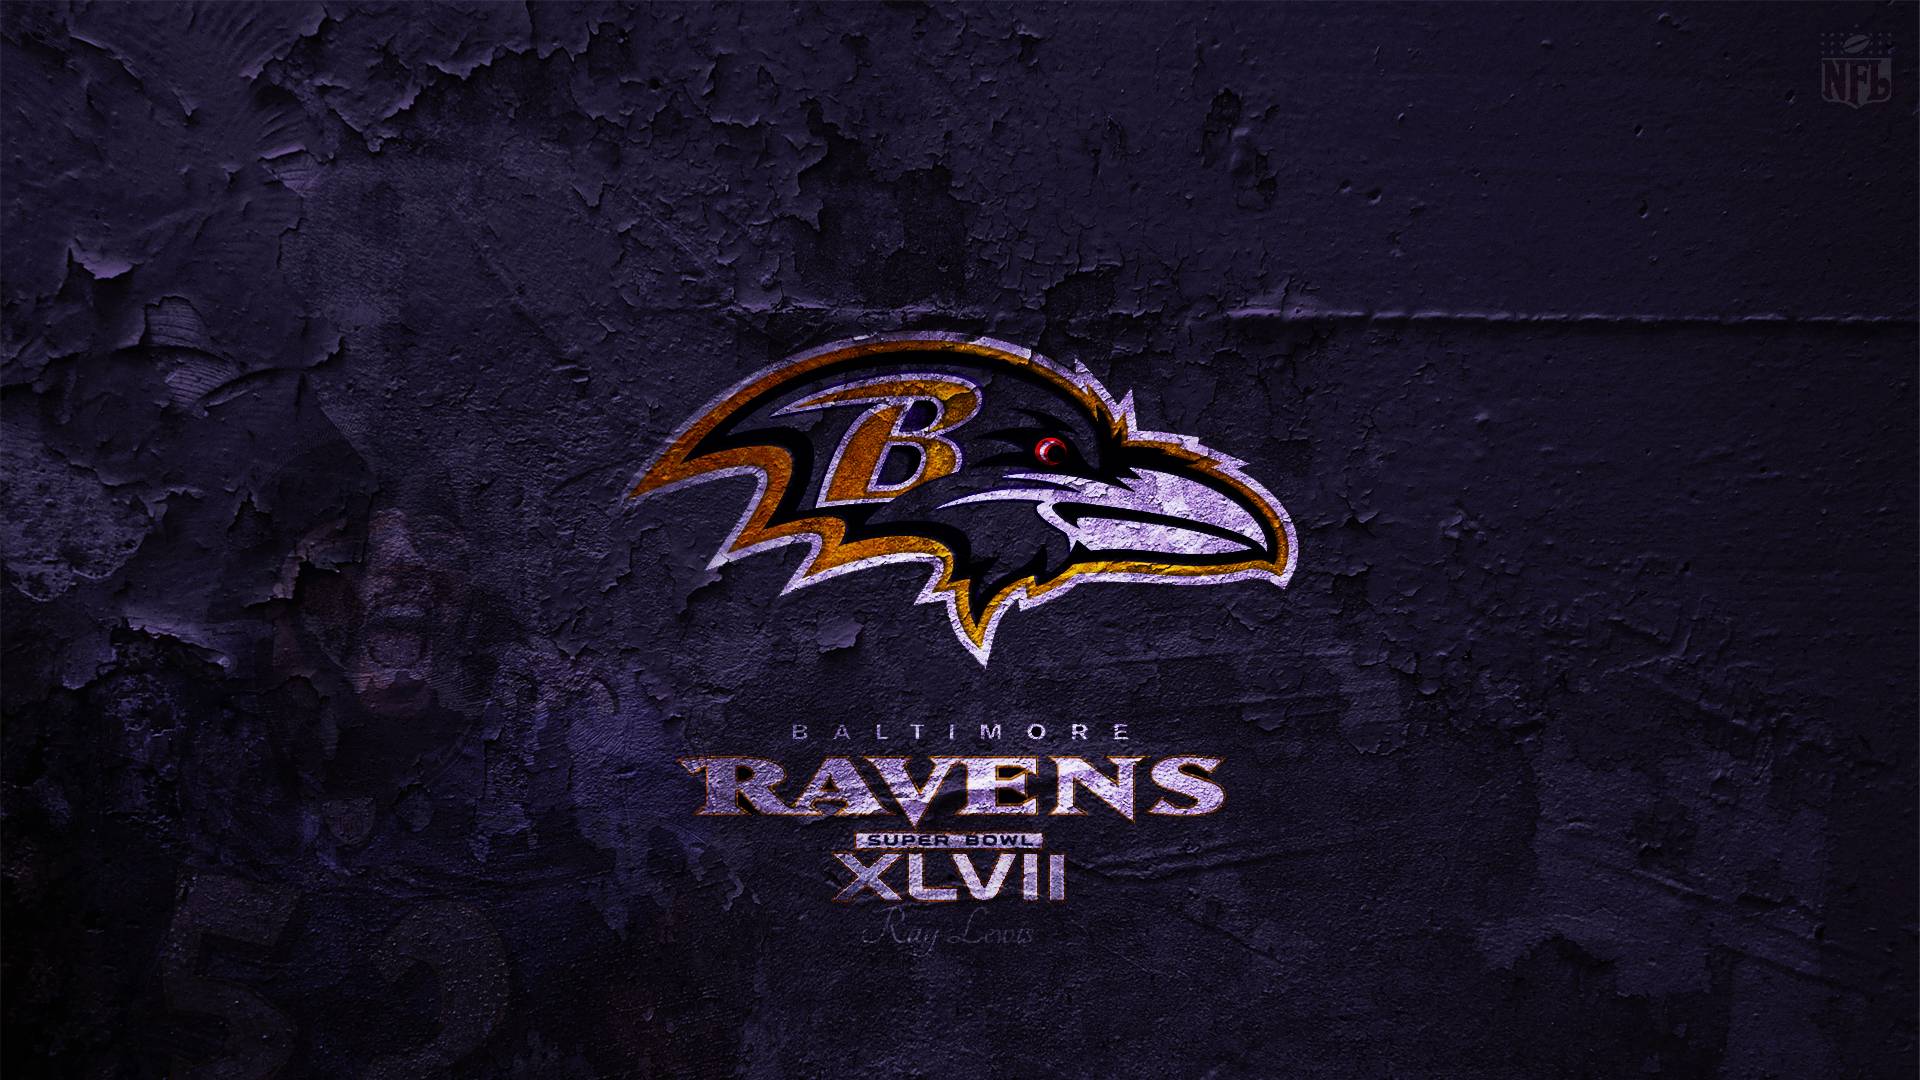 Wallpaper of the day: Baltimore Ravens. Baltimore Ravens wallpaper